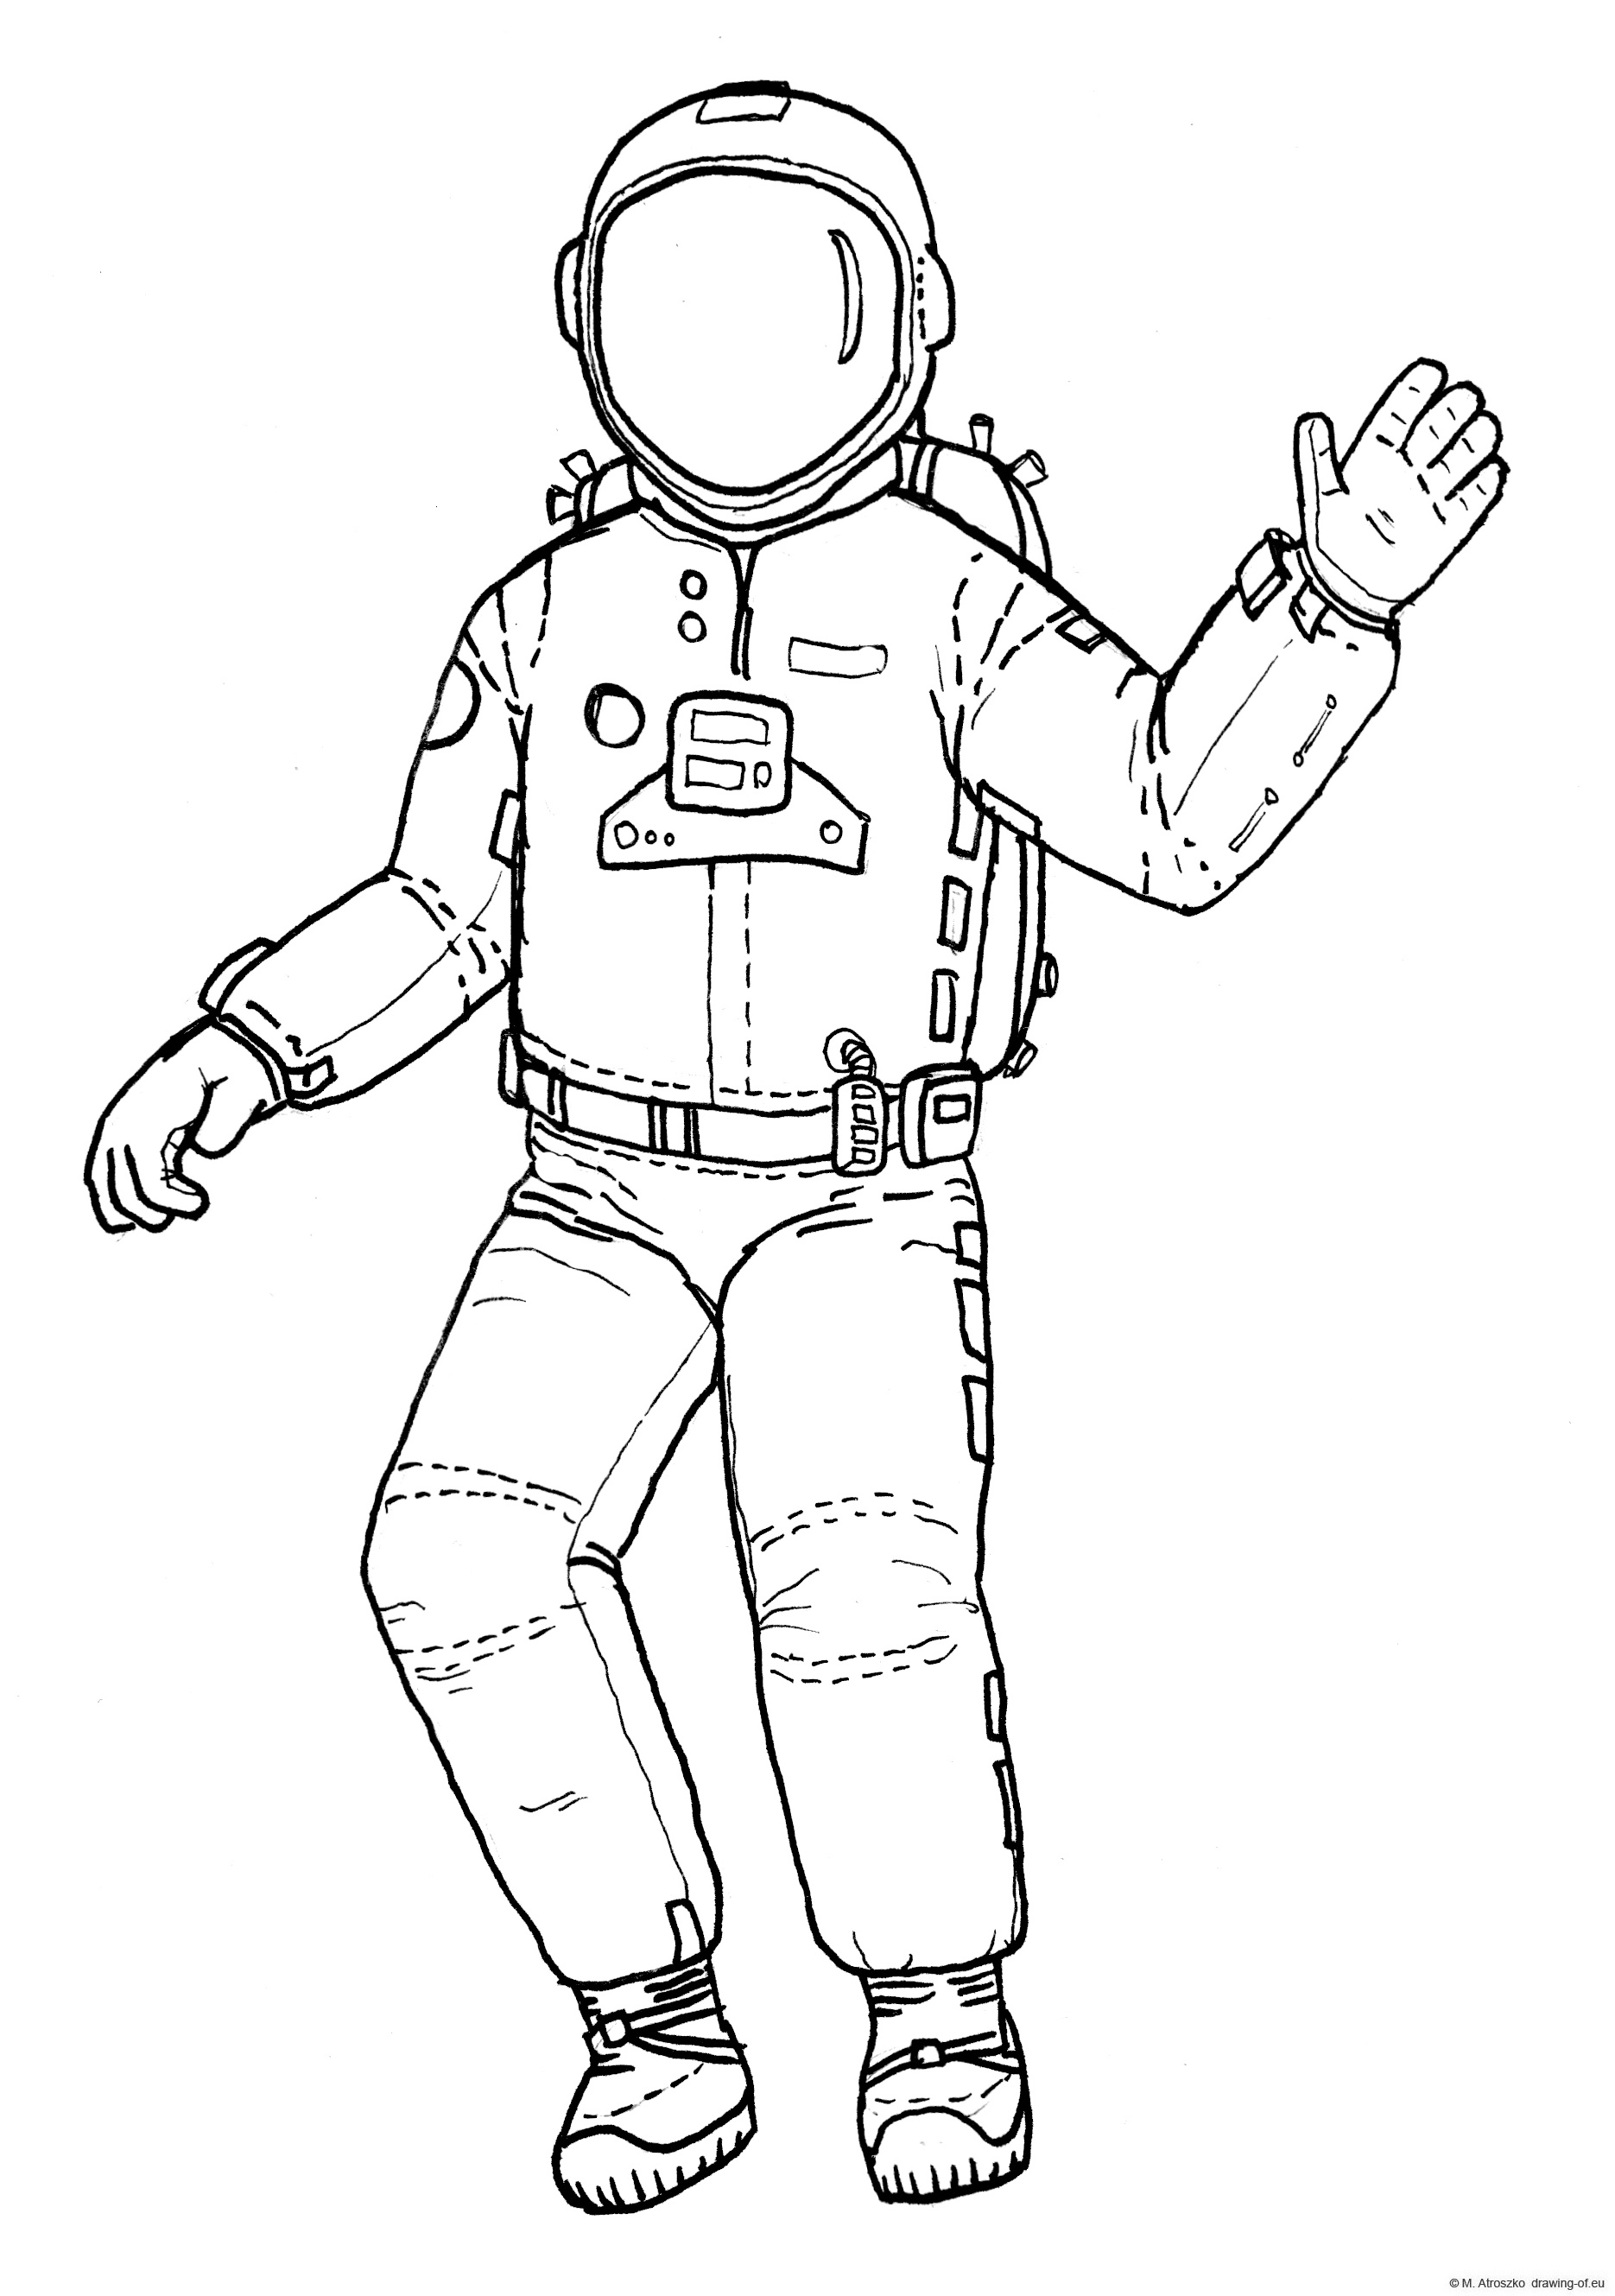 drawing - astronaut